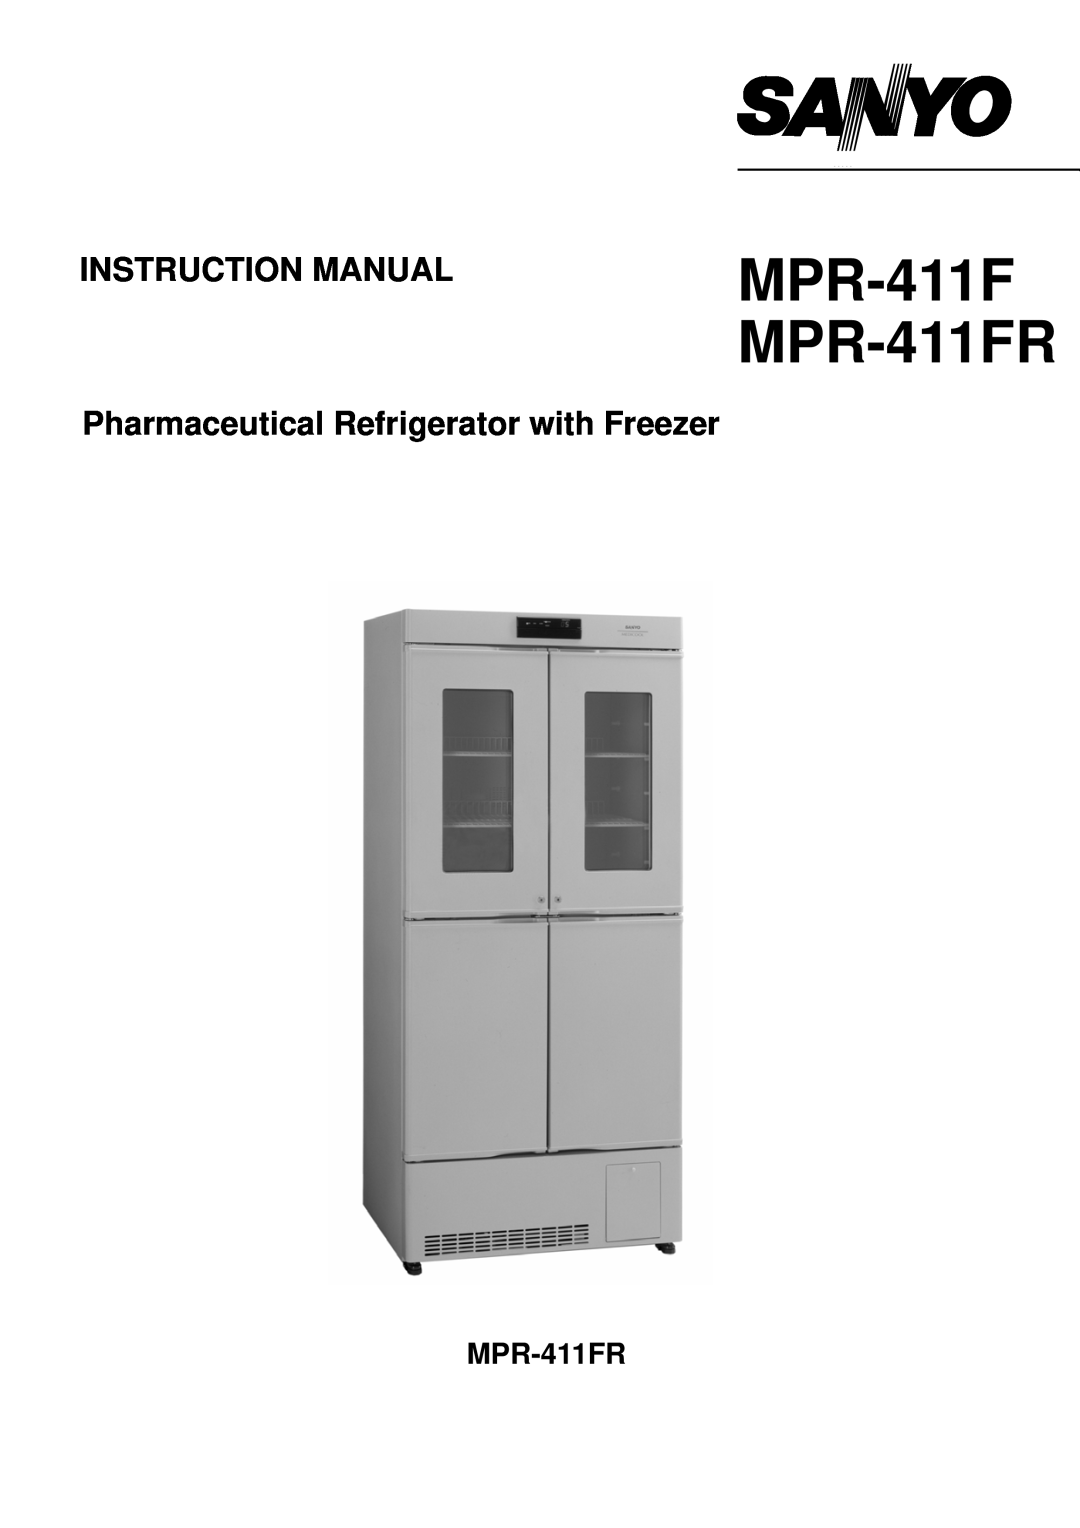 Sanyo instruction manual MPR-411F MPR-411FR, Pharmaceutical Refrigerator with Freezer 